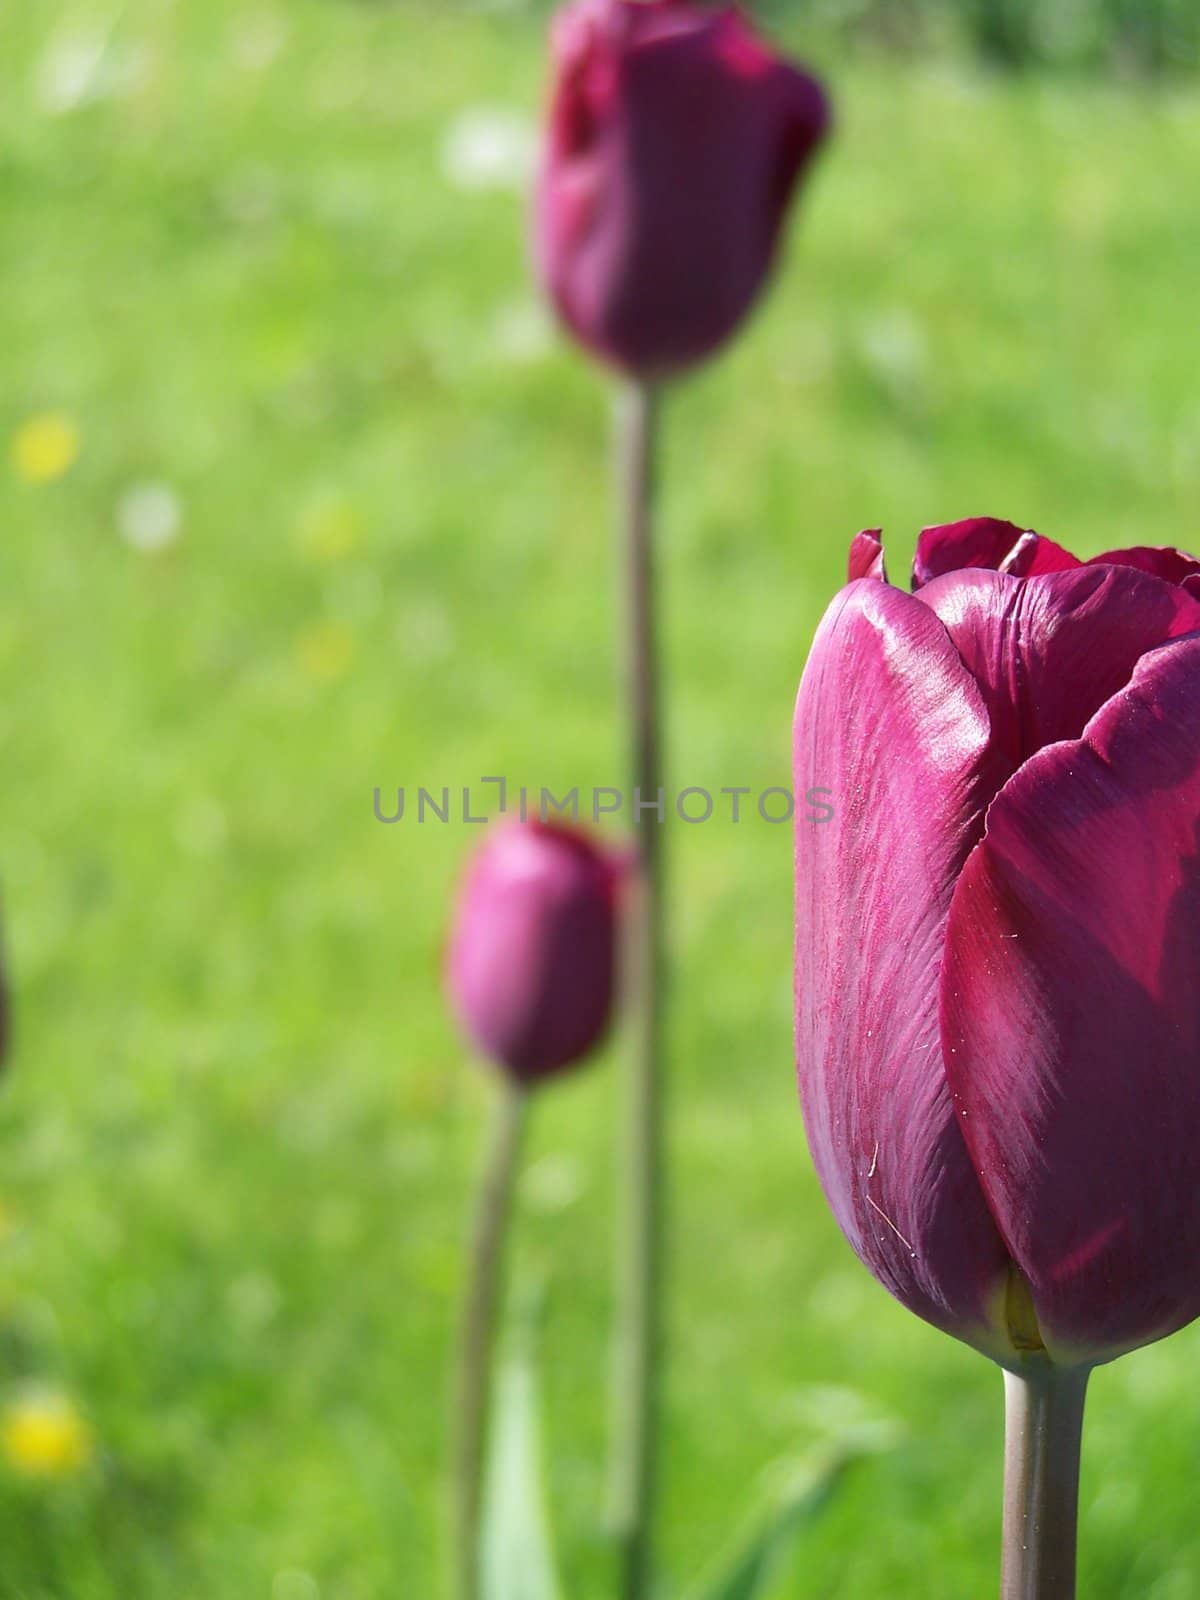 Close up of the puple tulip flower.